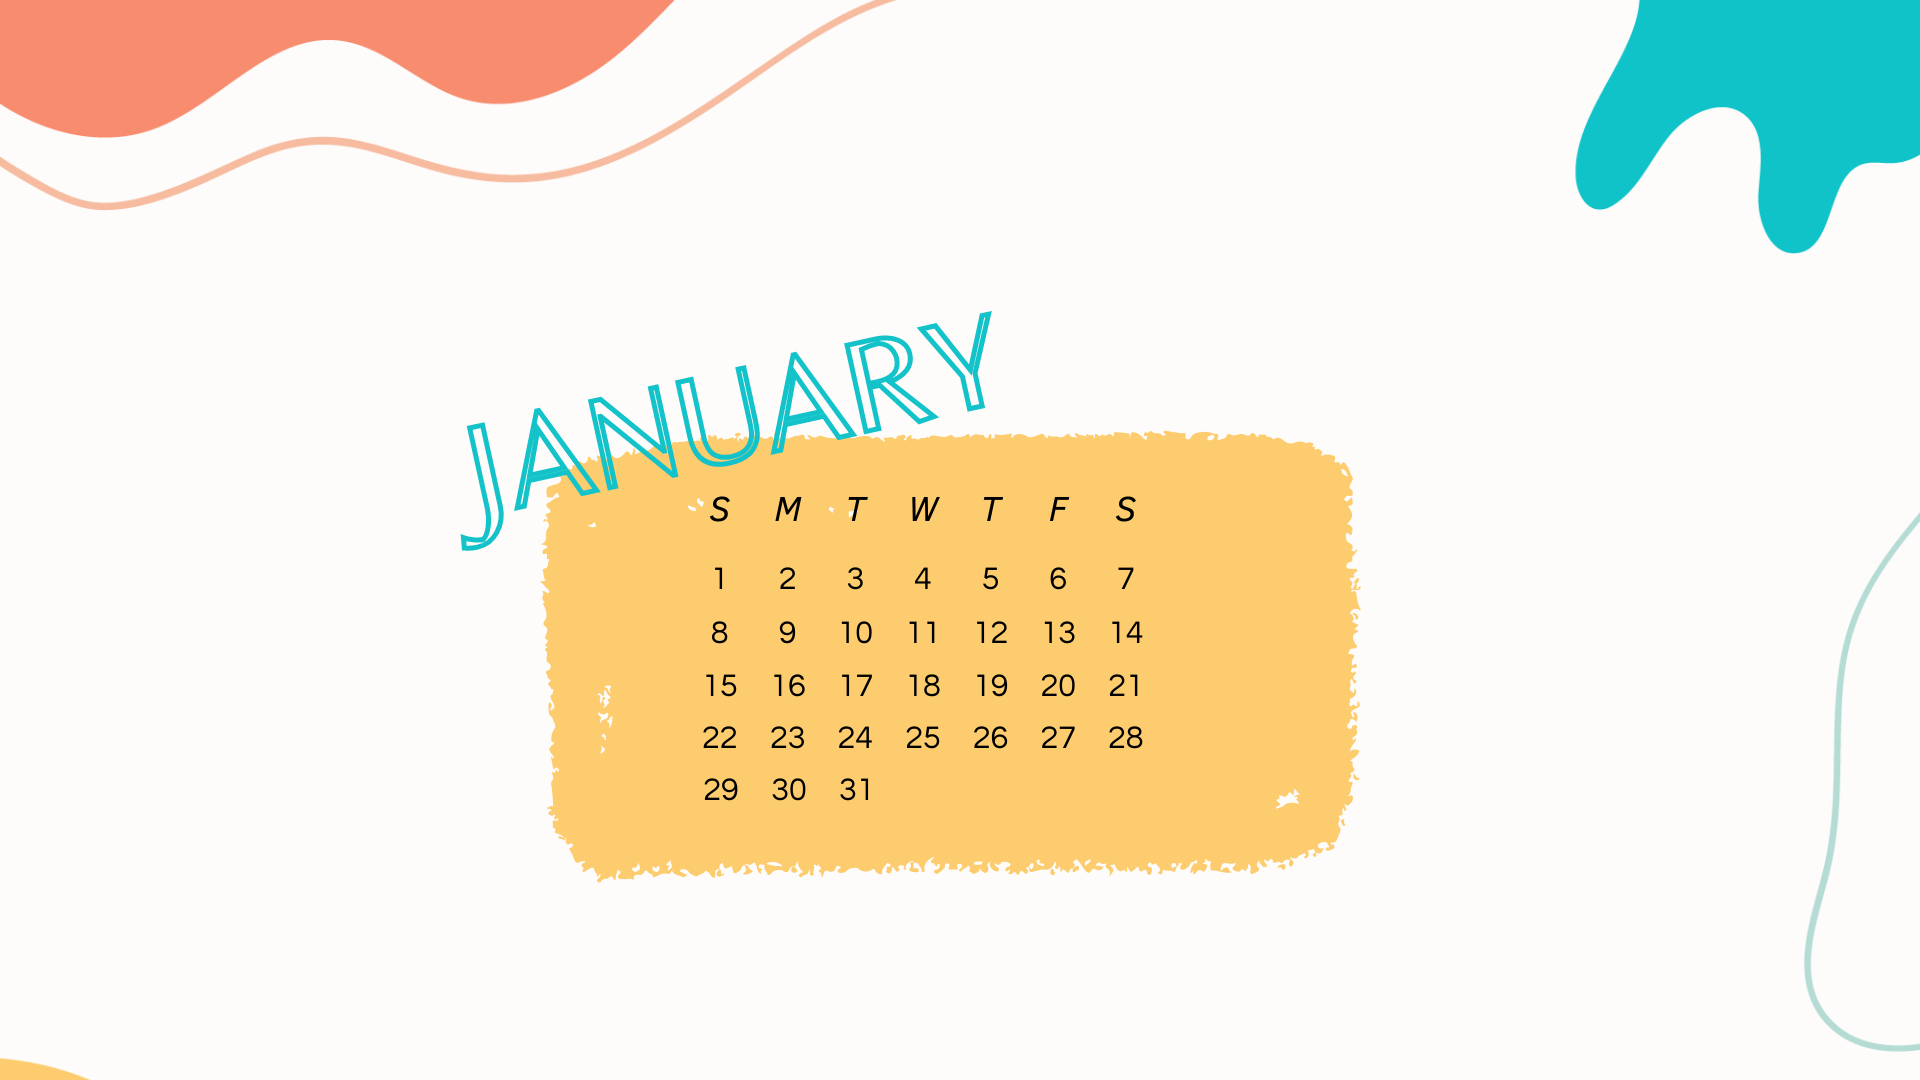 FREE JANUARY 2023 Desktop Calendar Backgrounds